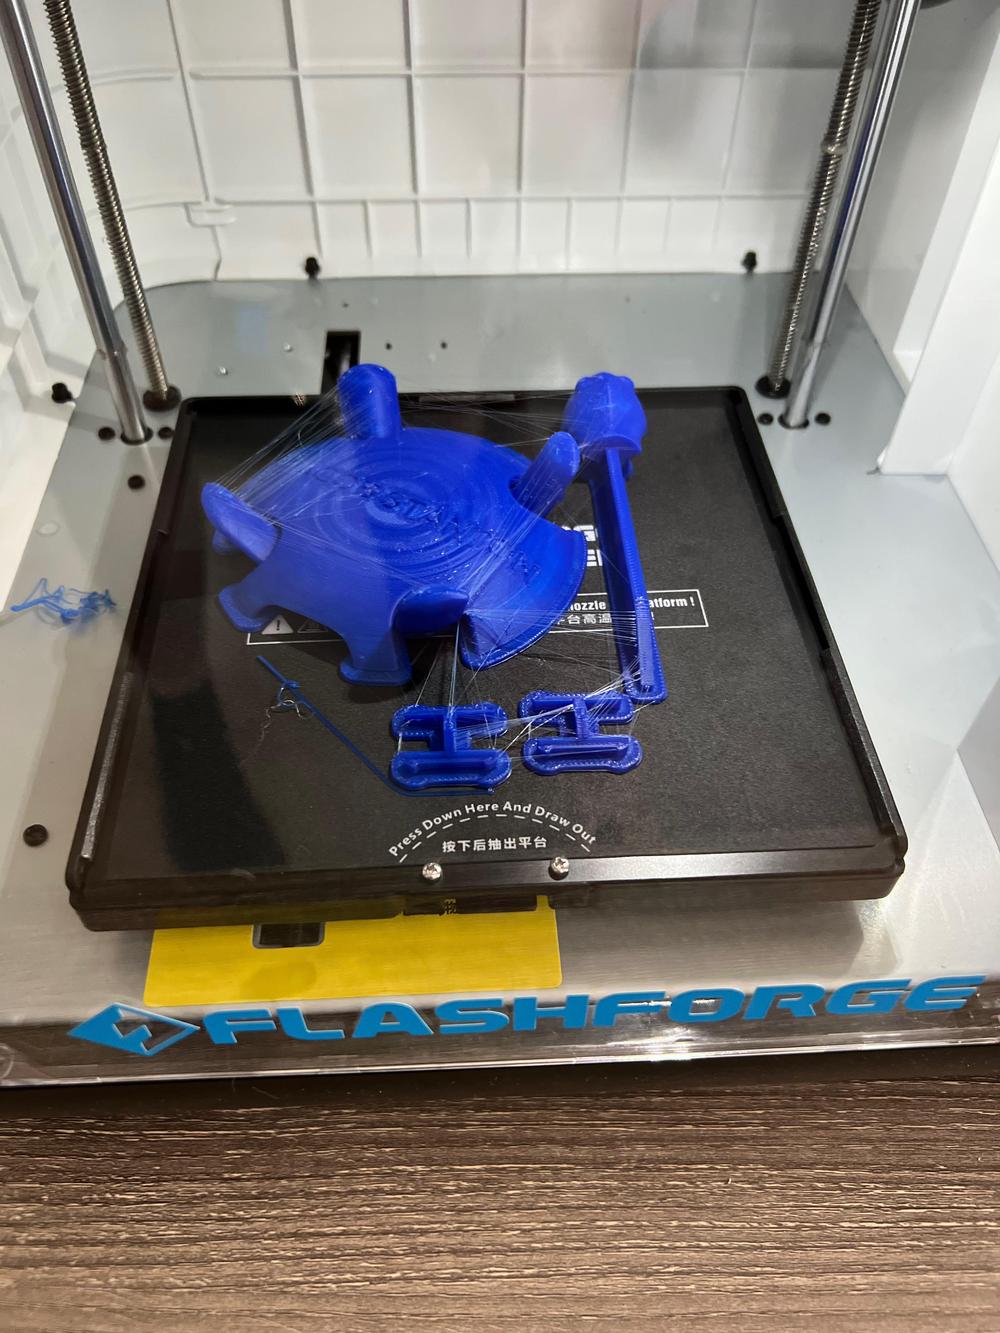 A 3D printer prints a blue object.